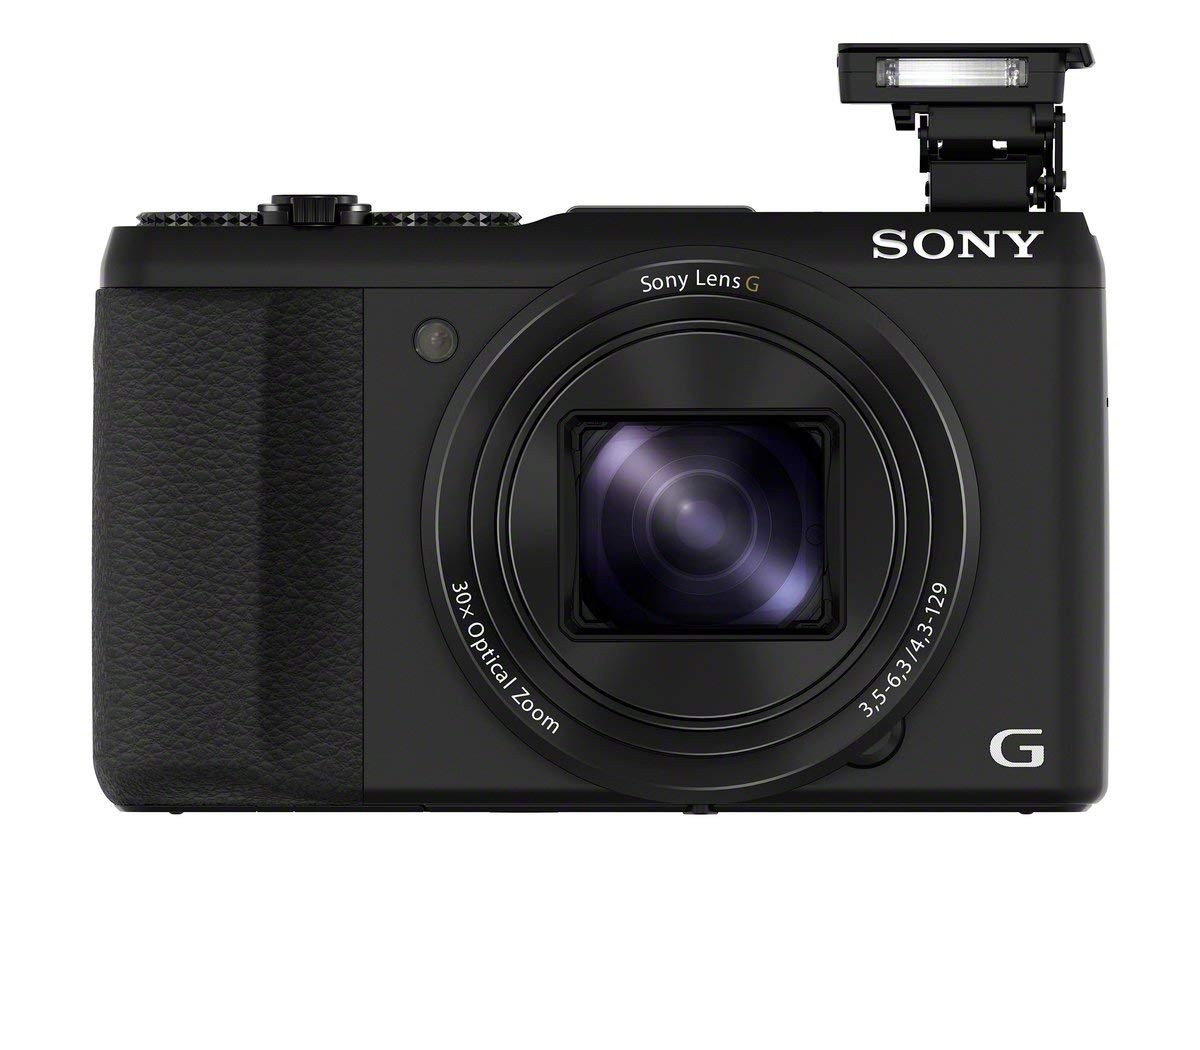 Sony 20.4MP High Zoom Digital Camera with 3-Inch LCD Screen 30x optical/60x Clear Image zoom Wi-Fi WiFi